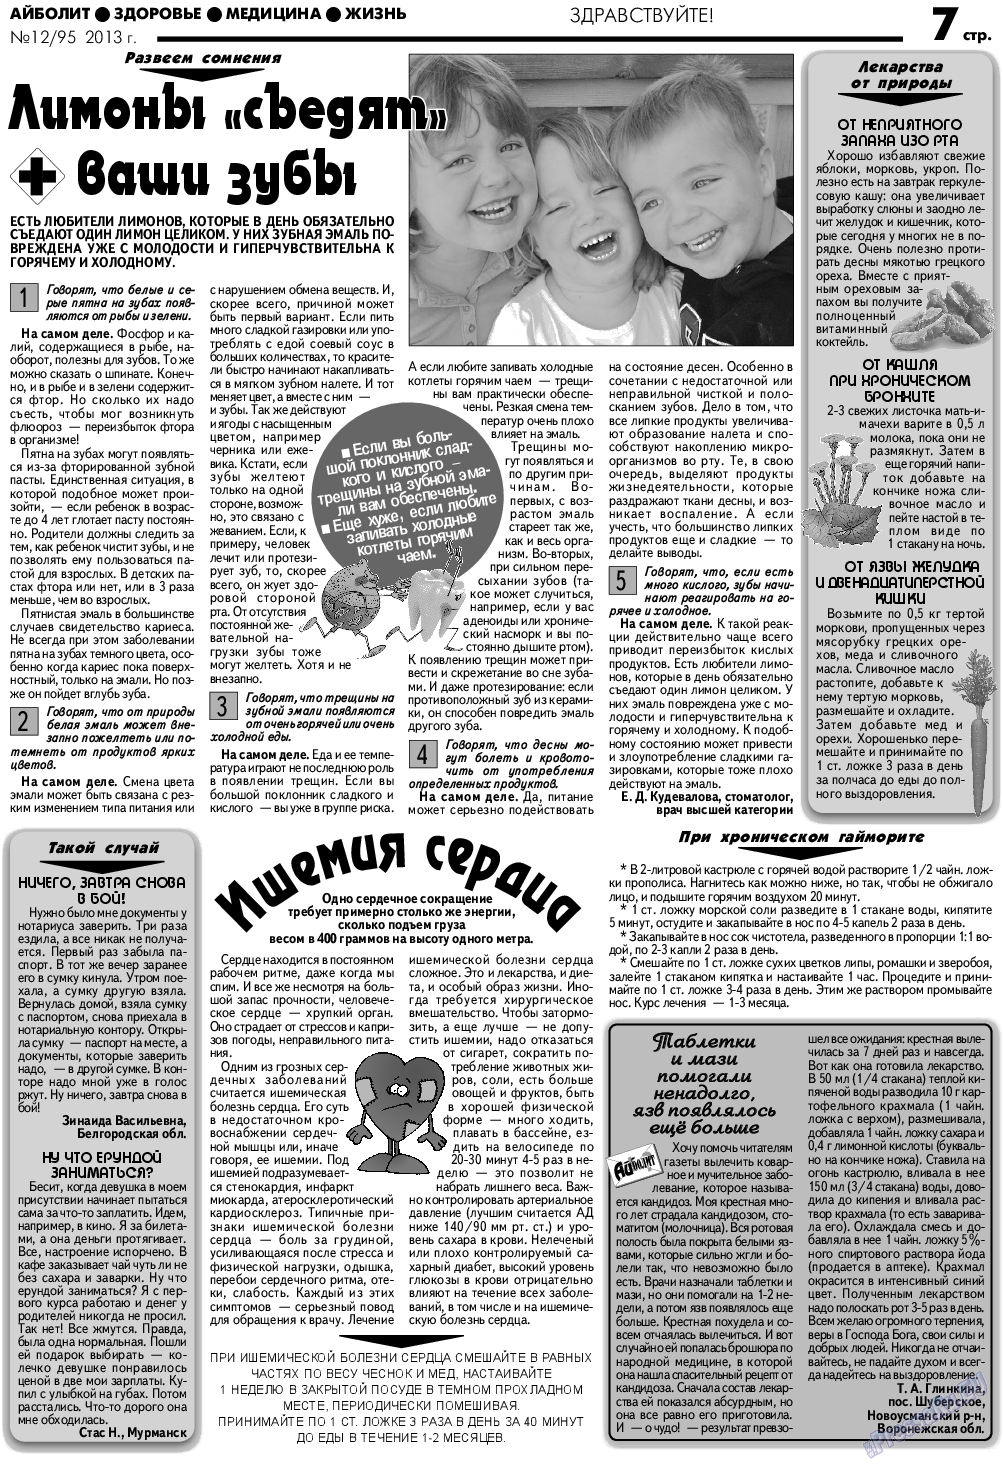 АйБолит (газета). 2013 год, номер 12, стр. 7